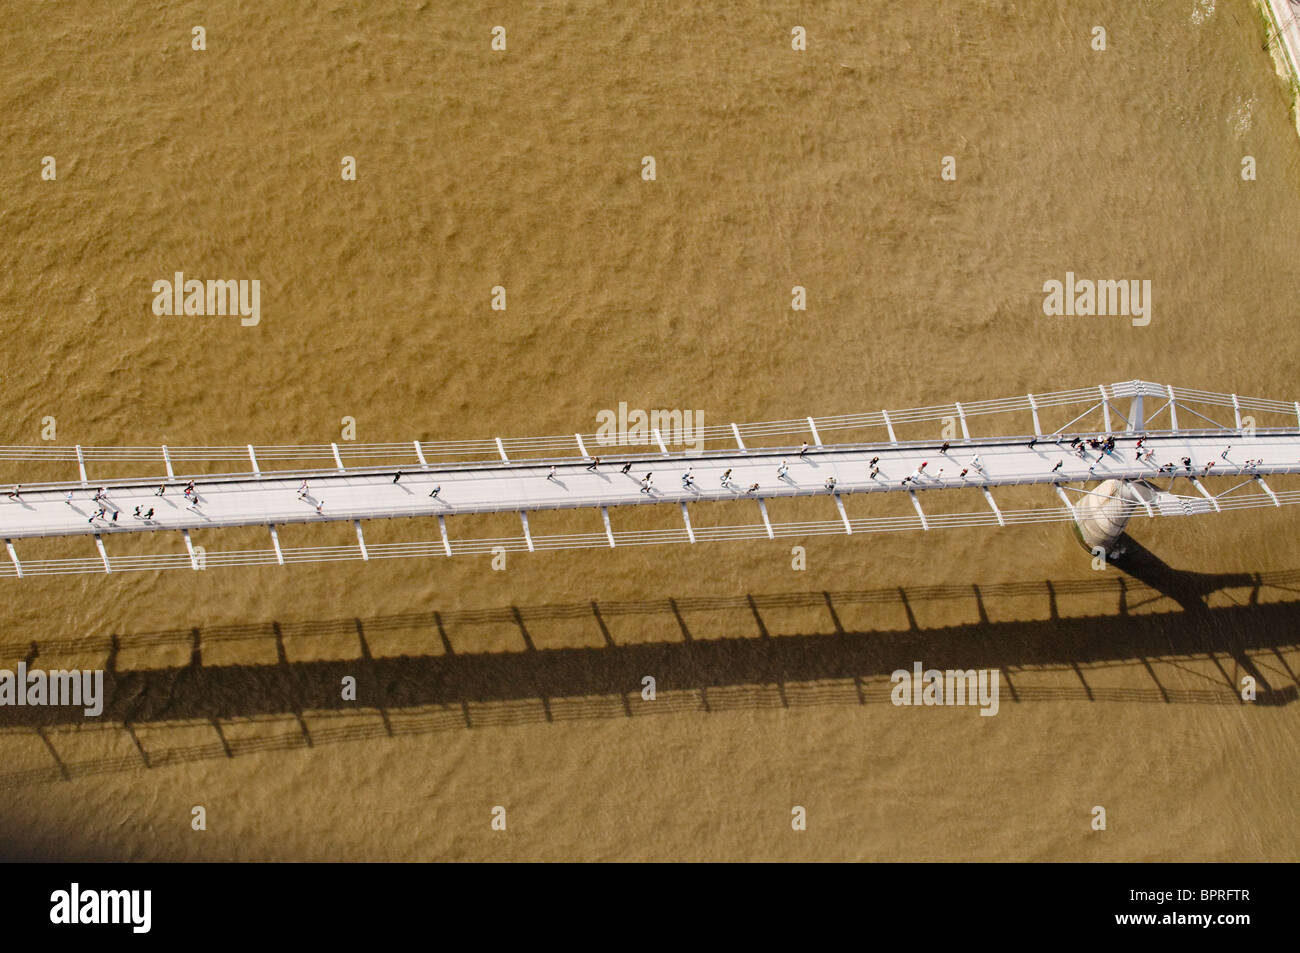 London Millennium Bridge from the air Stock Photo